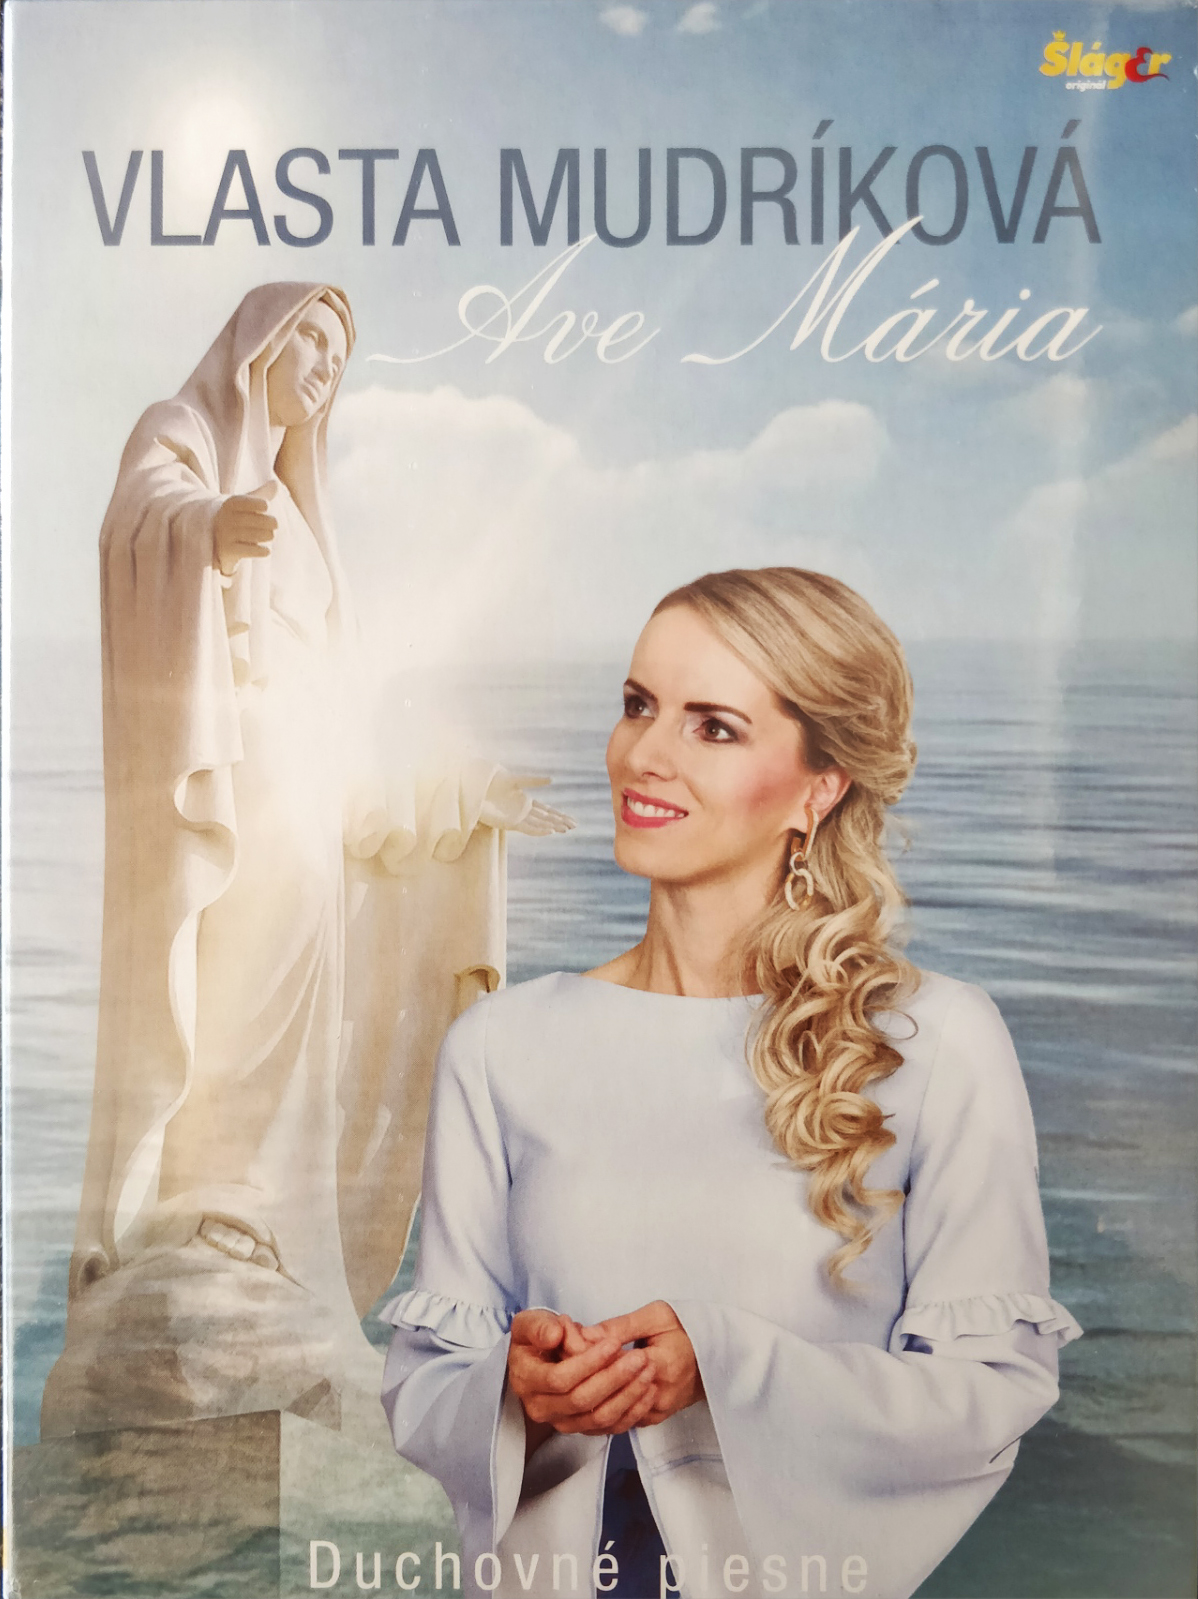 Mudrikova Vlasta - Ave Maria /CD+DVD/